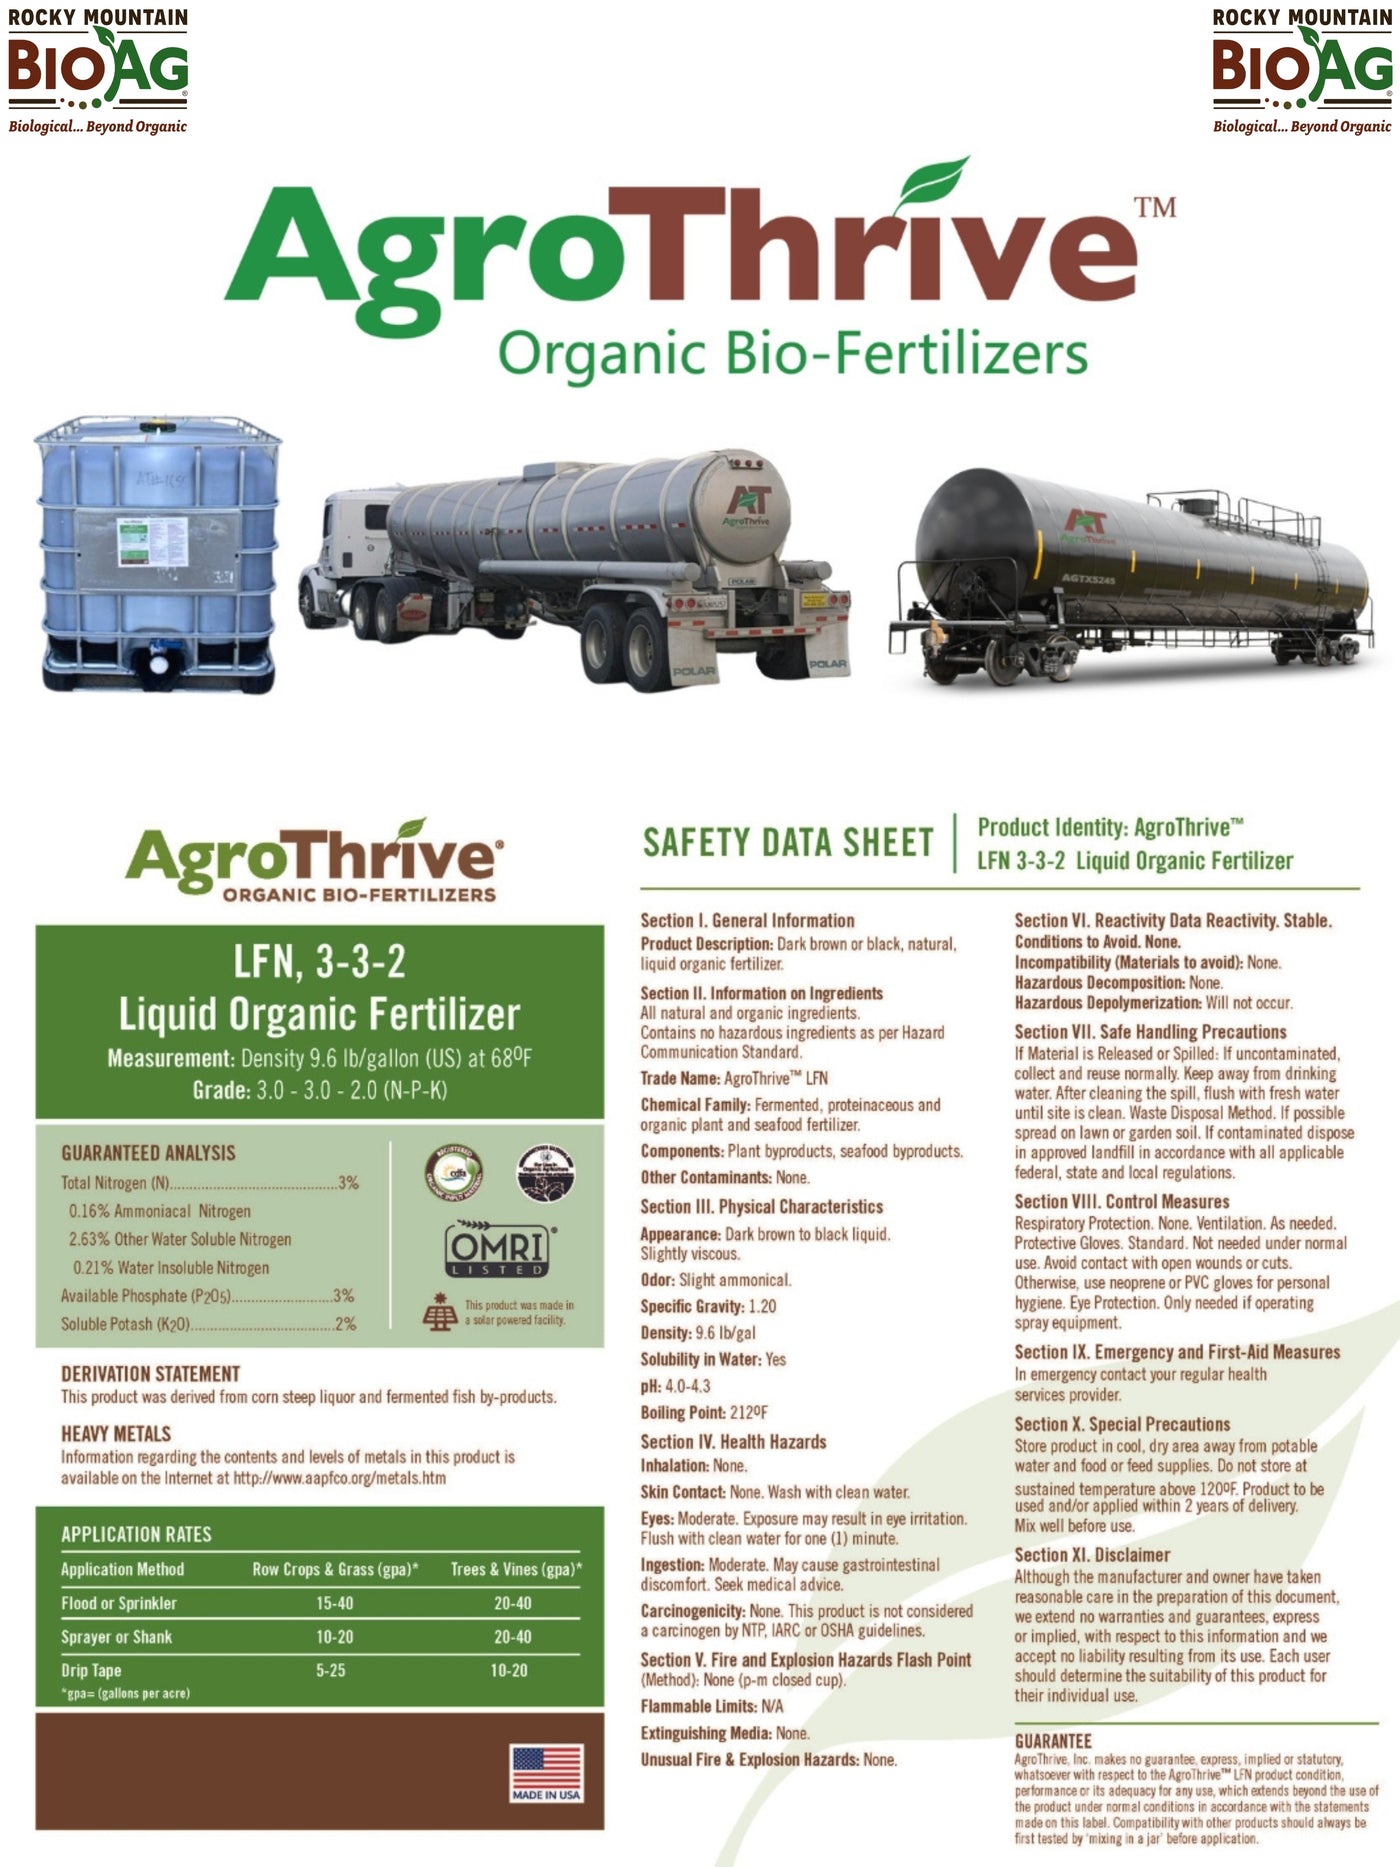 AgroThrive LFN 3.0-3.0-2.0 Nutrient Enhanced Liquid Organic Fertilizer Information